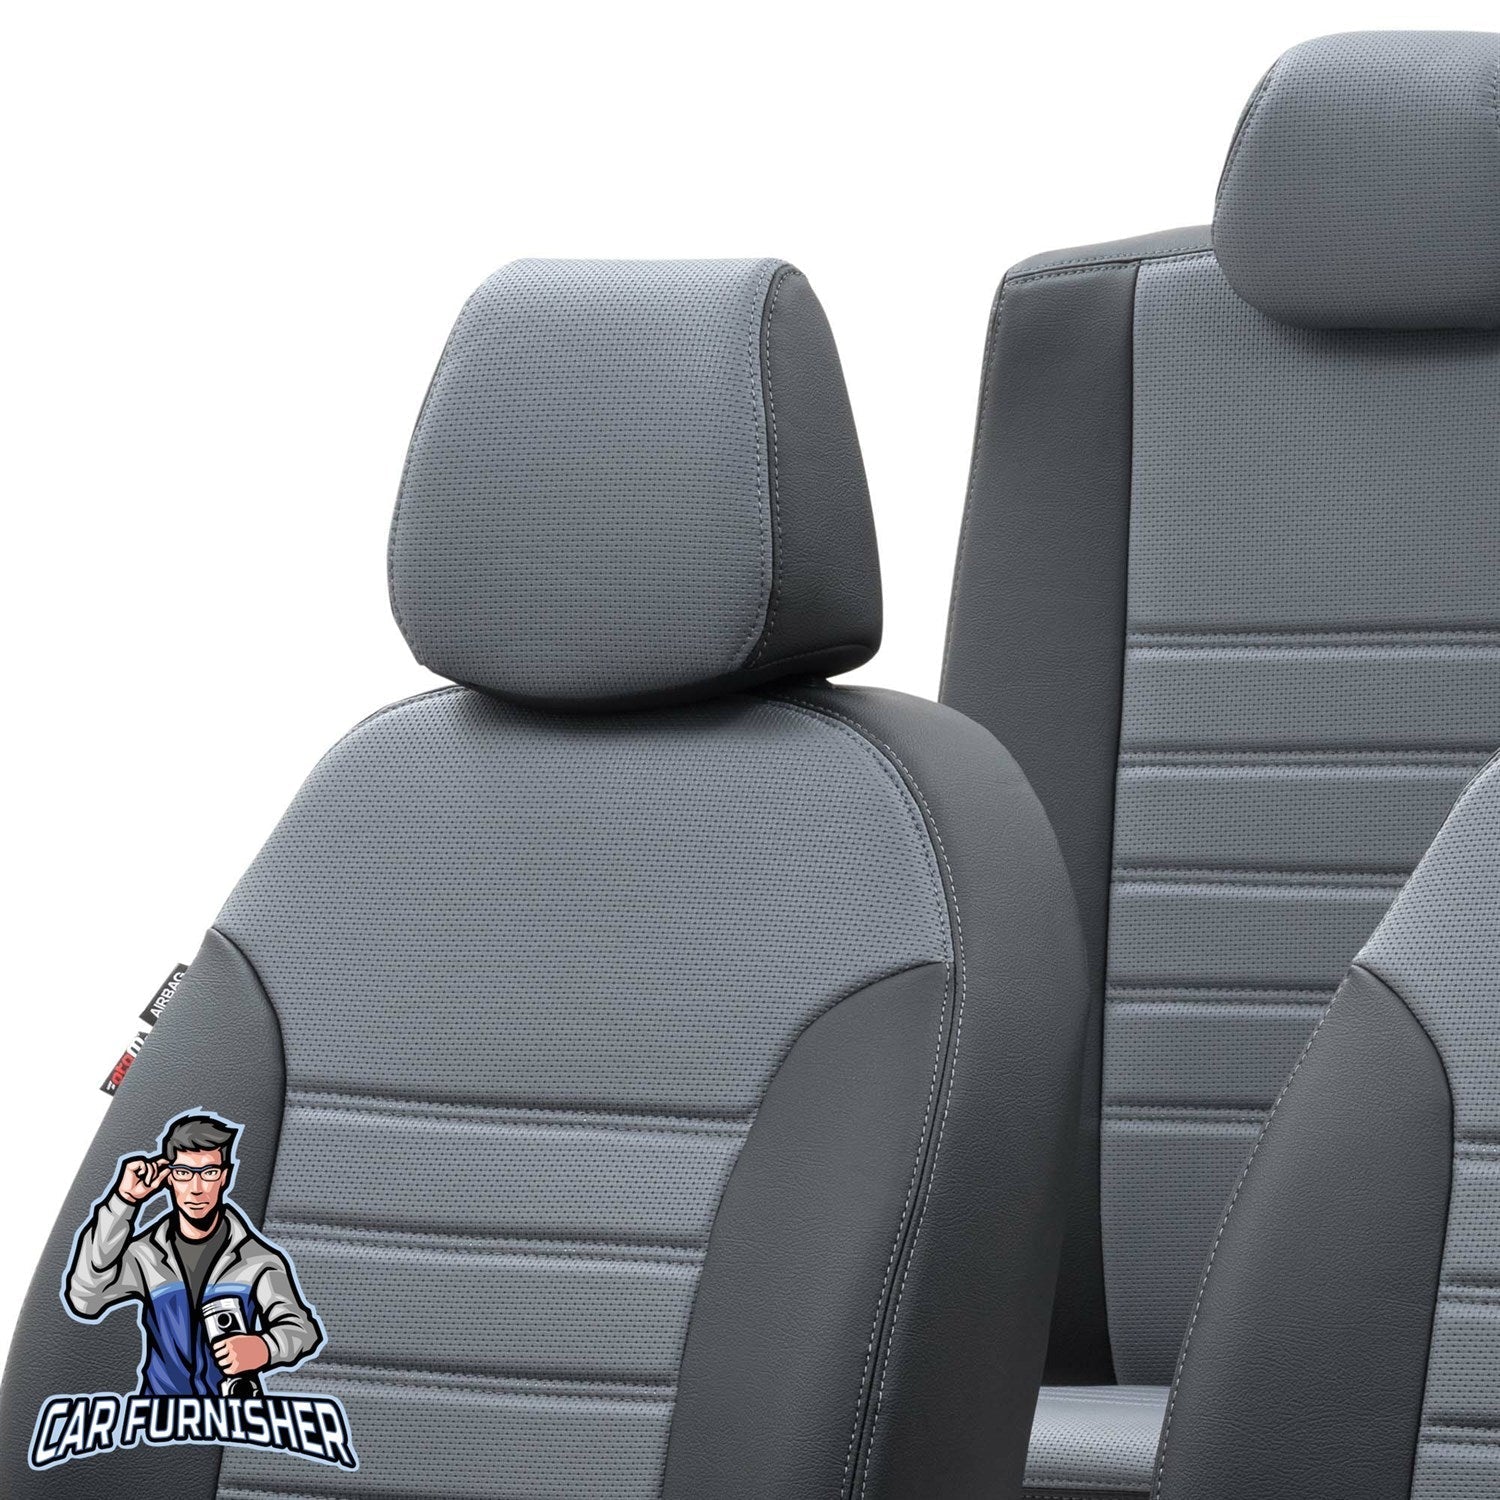 Chevrolet Tahoe Car Seat Covers 2007-2014 GMT/LS/LTZ New York Smoked Black Full Set (5 Seats + Handrest) Leather & Fabric